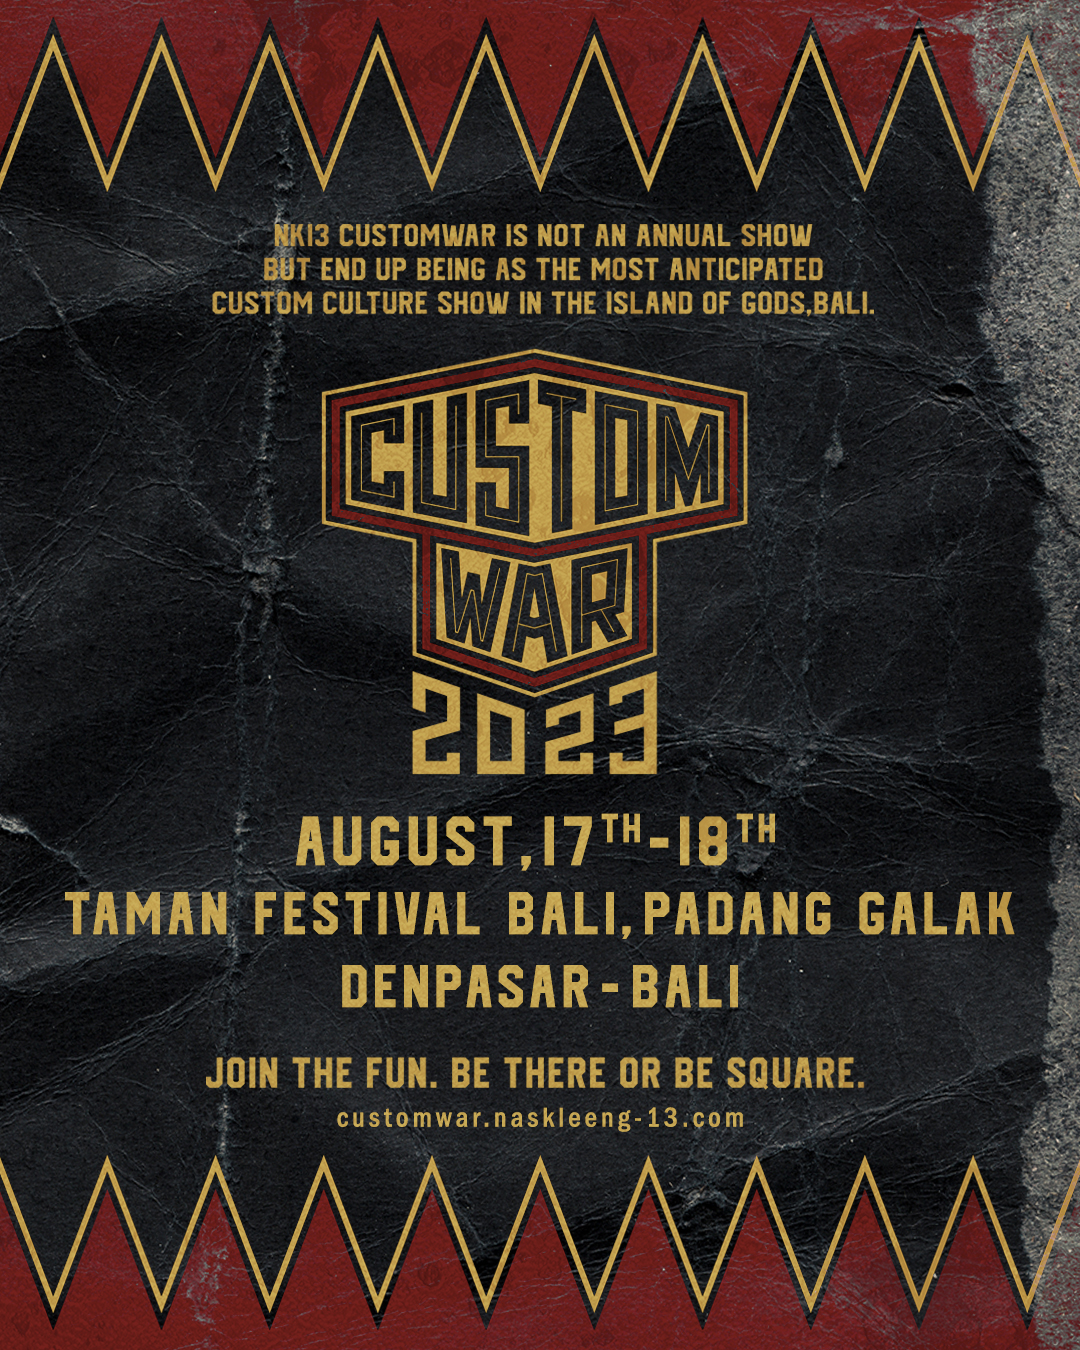 NK13 Custom War 2023, Acara Kustom Kultur Terbesar di Bali